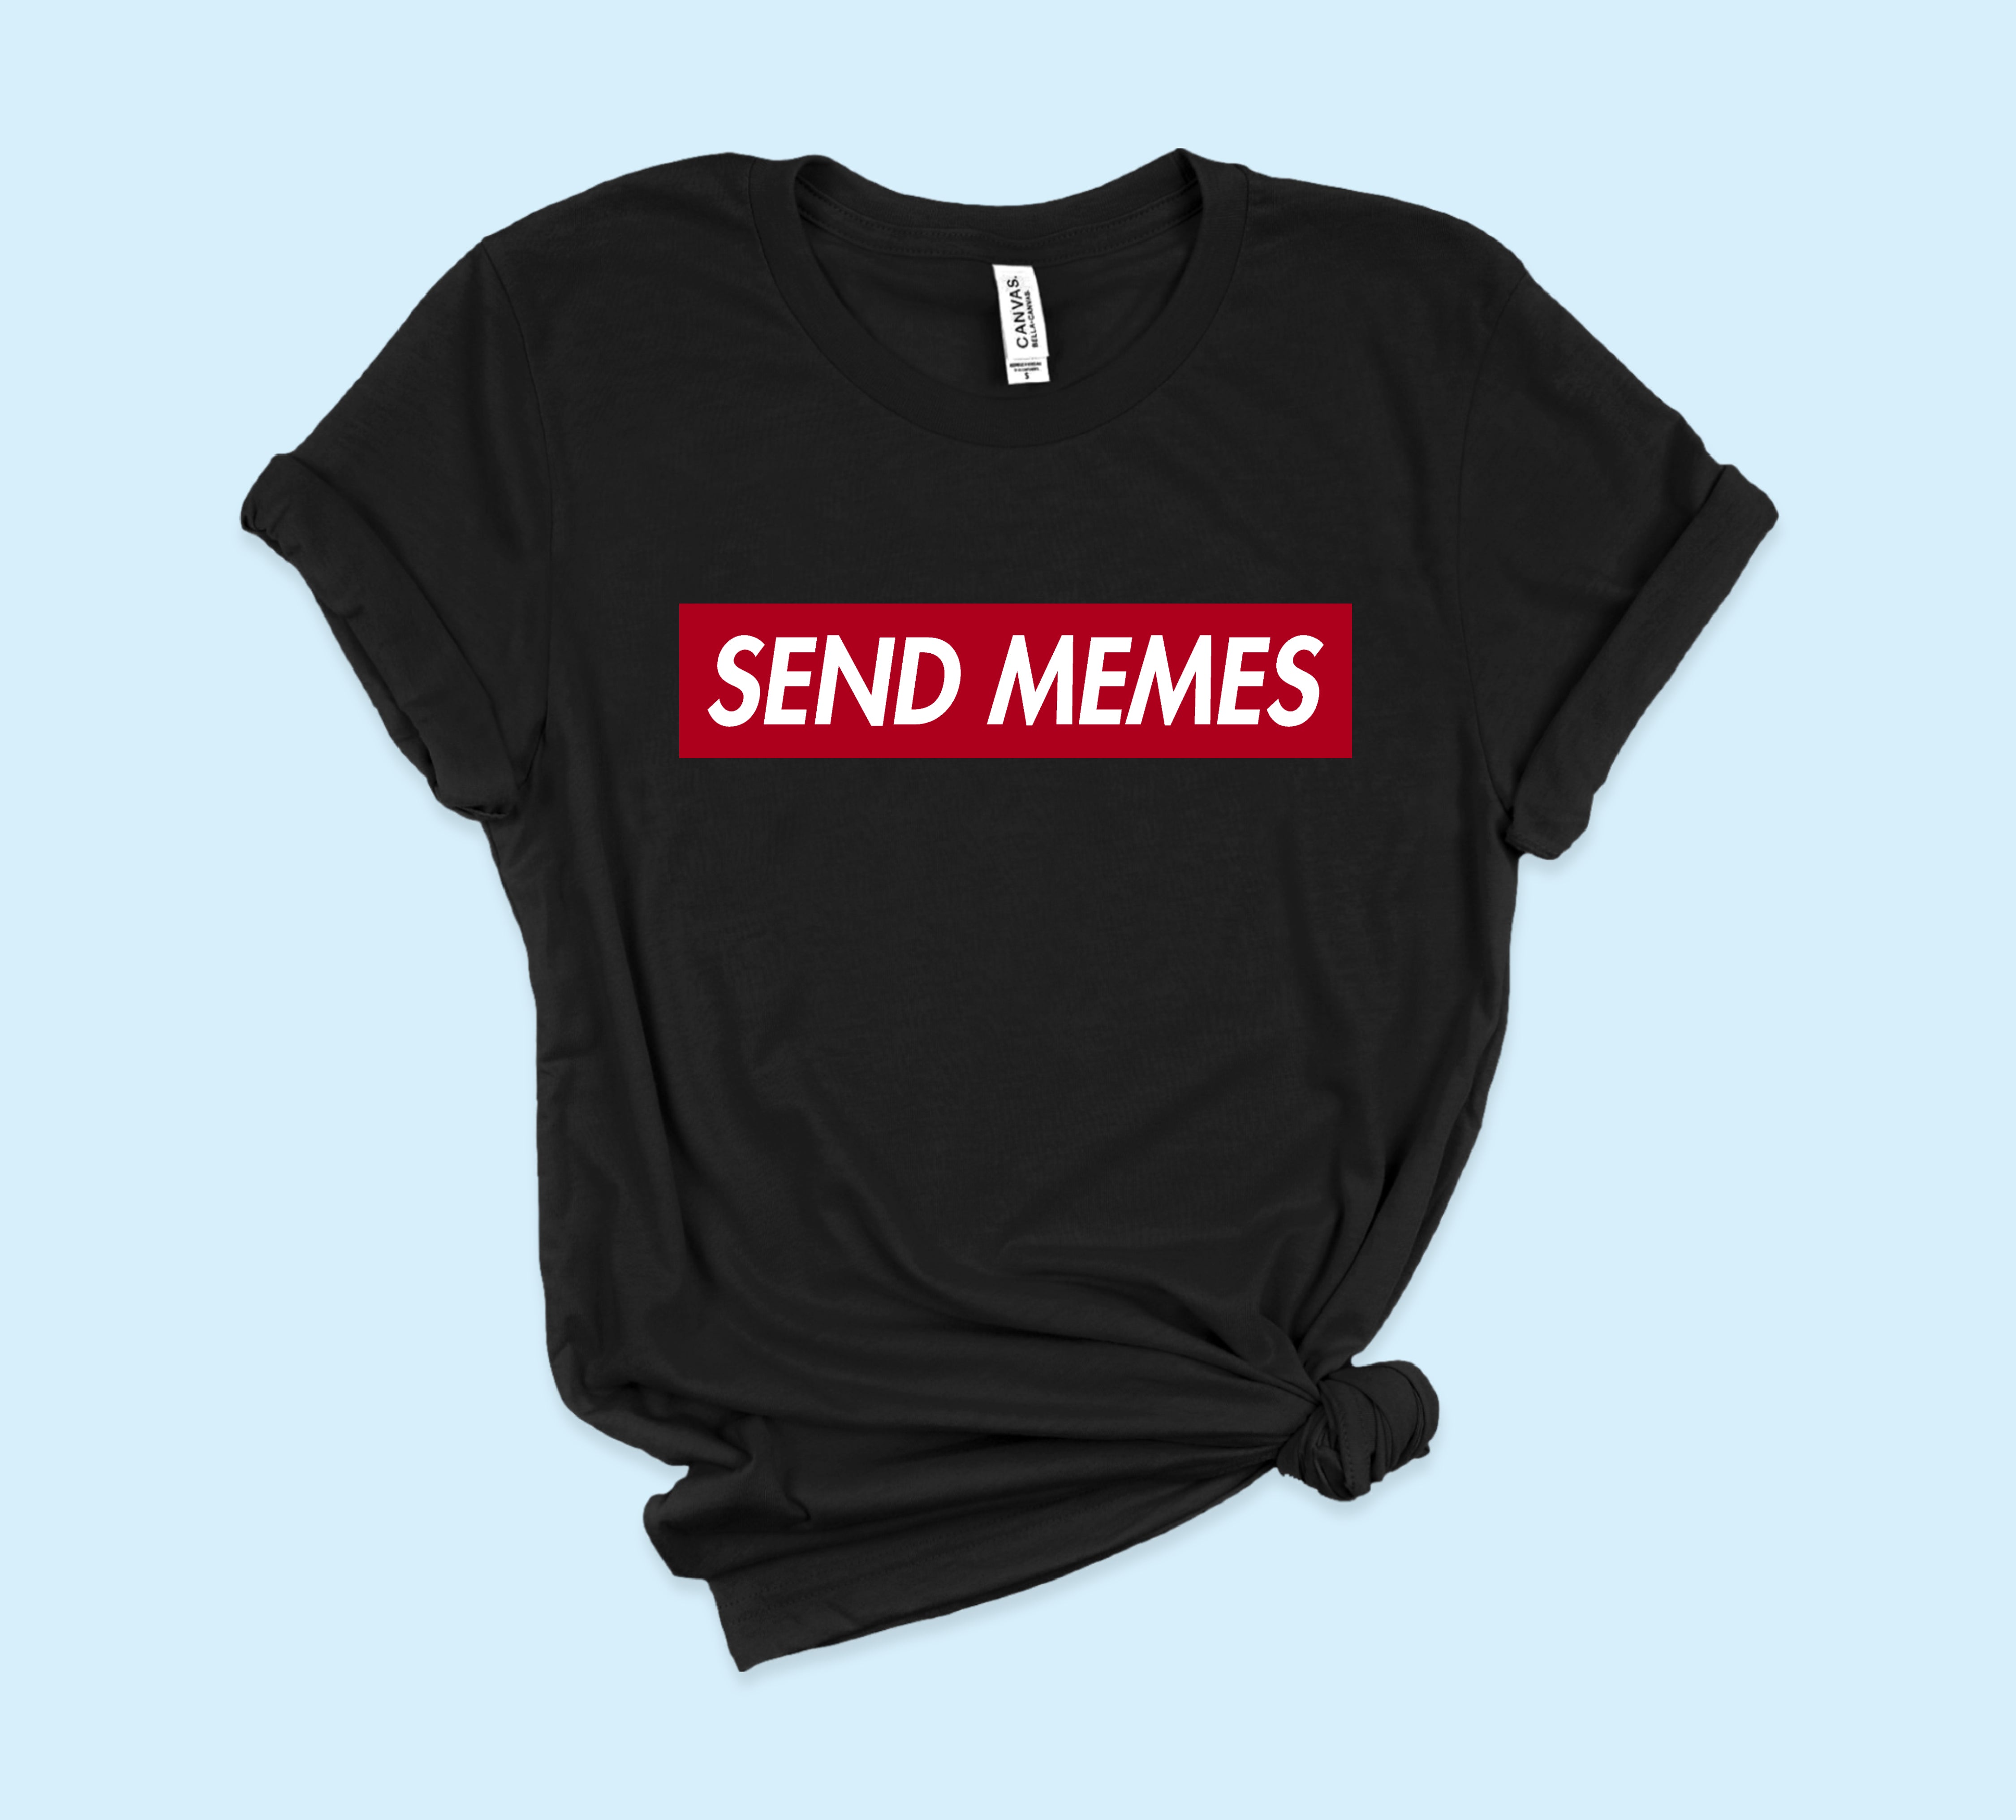 Løve Middelhavet Prestigefyldte Send Memes Shirt - Supreme Meme Shirt - Funny Meme Shirt - HighCiti